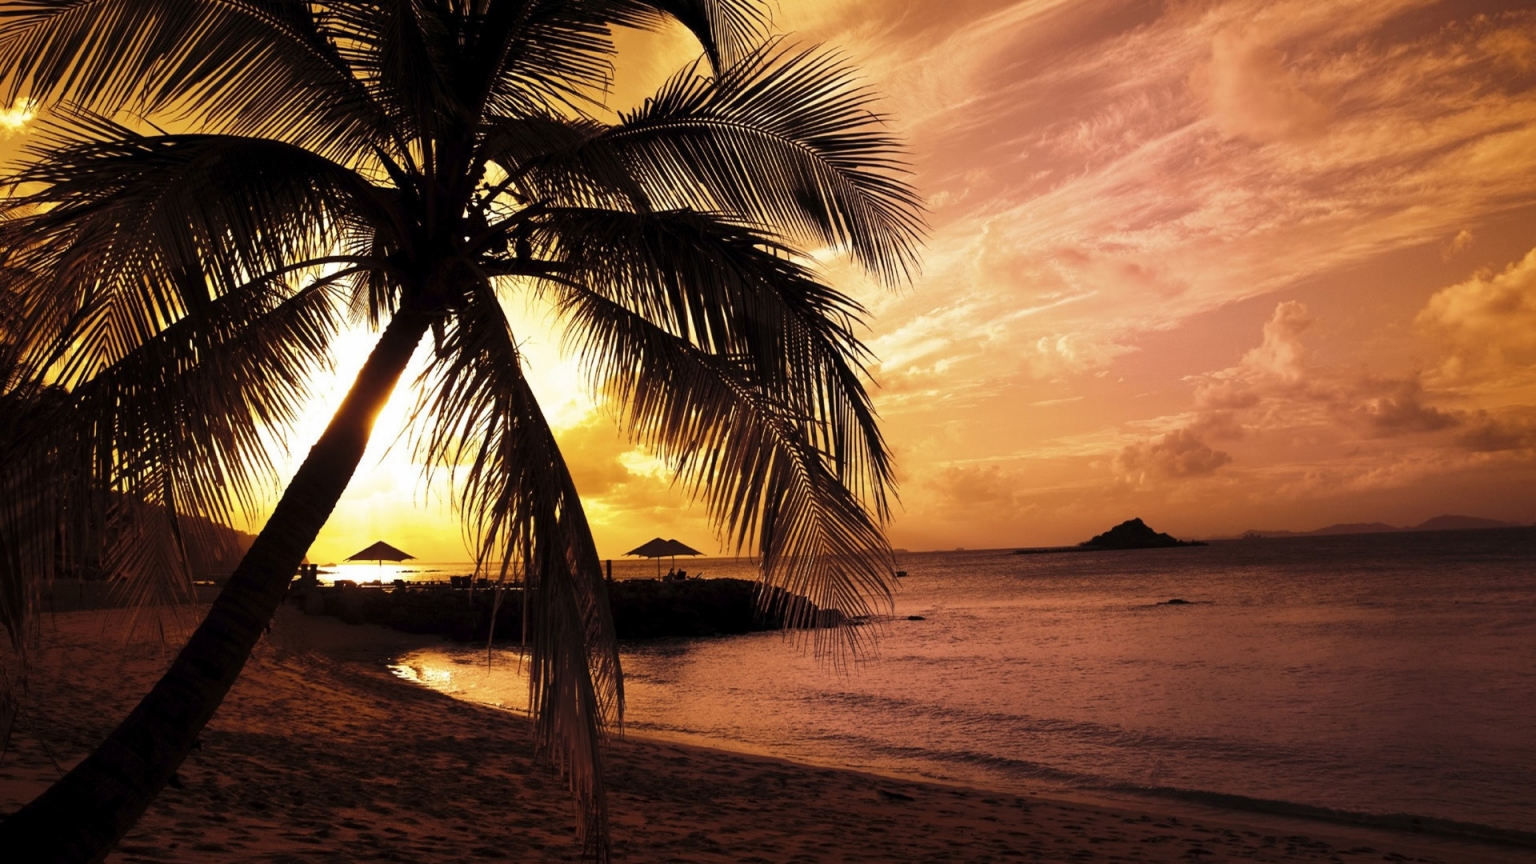 Beach Sunset for 1536 x 864 HDTV resolution